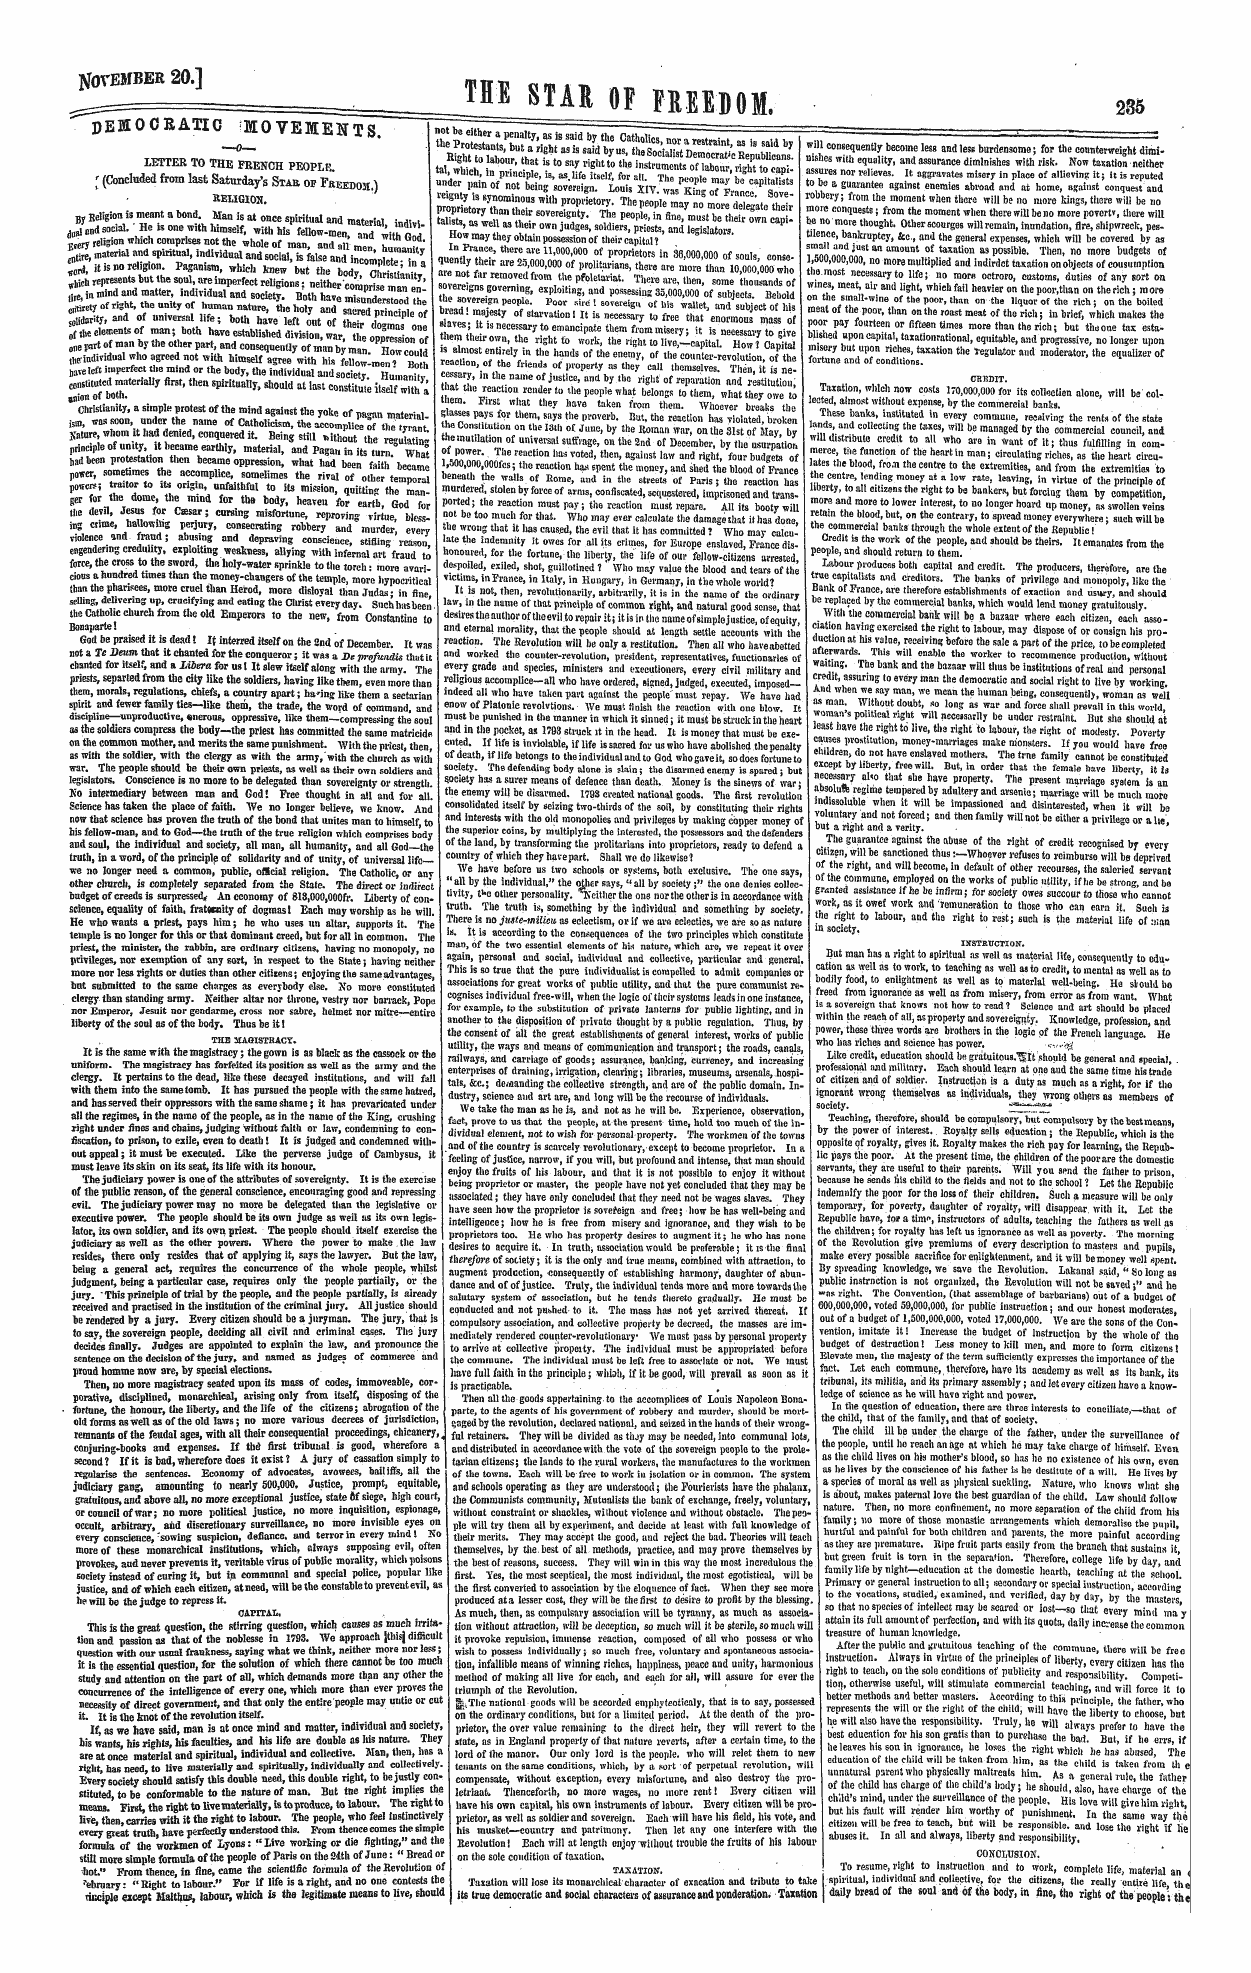 Northern Star (1837-1852): jS F Y, 1st edition - Tlemocratic !Tvrn Vrtvr -P Lo-M ' A " ~~ J)E3koc Ratio Movements.